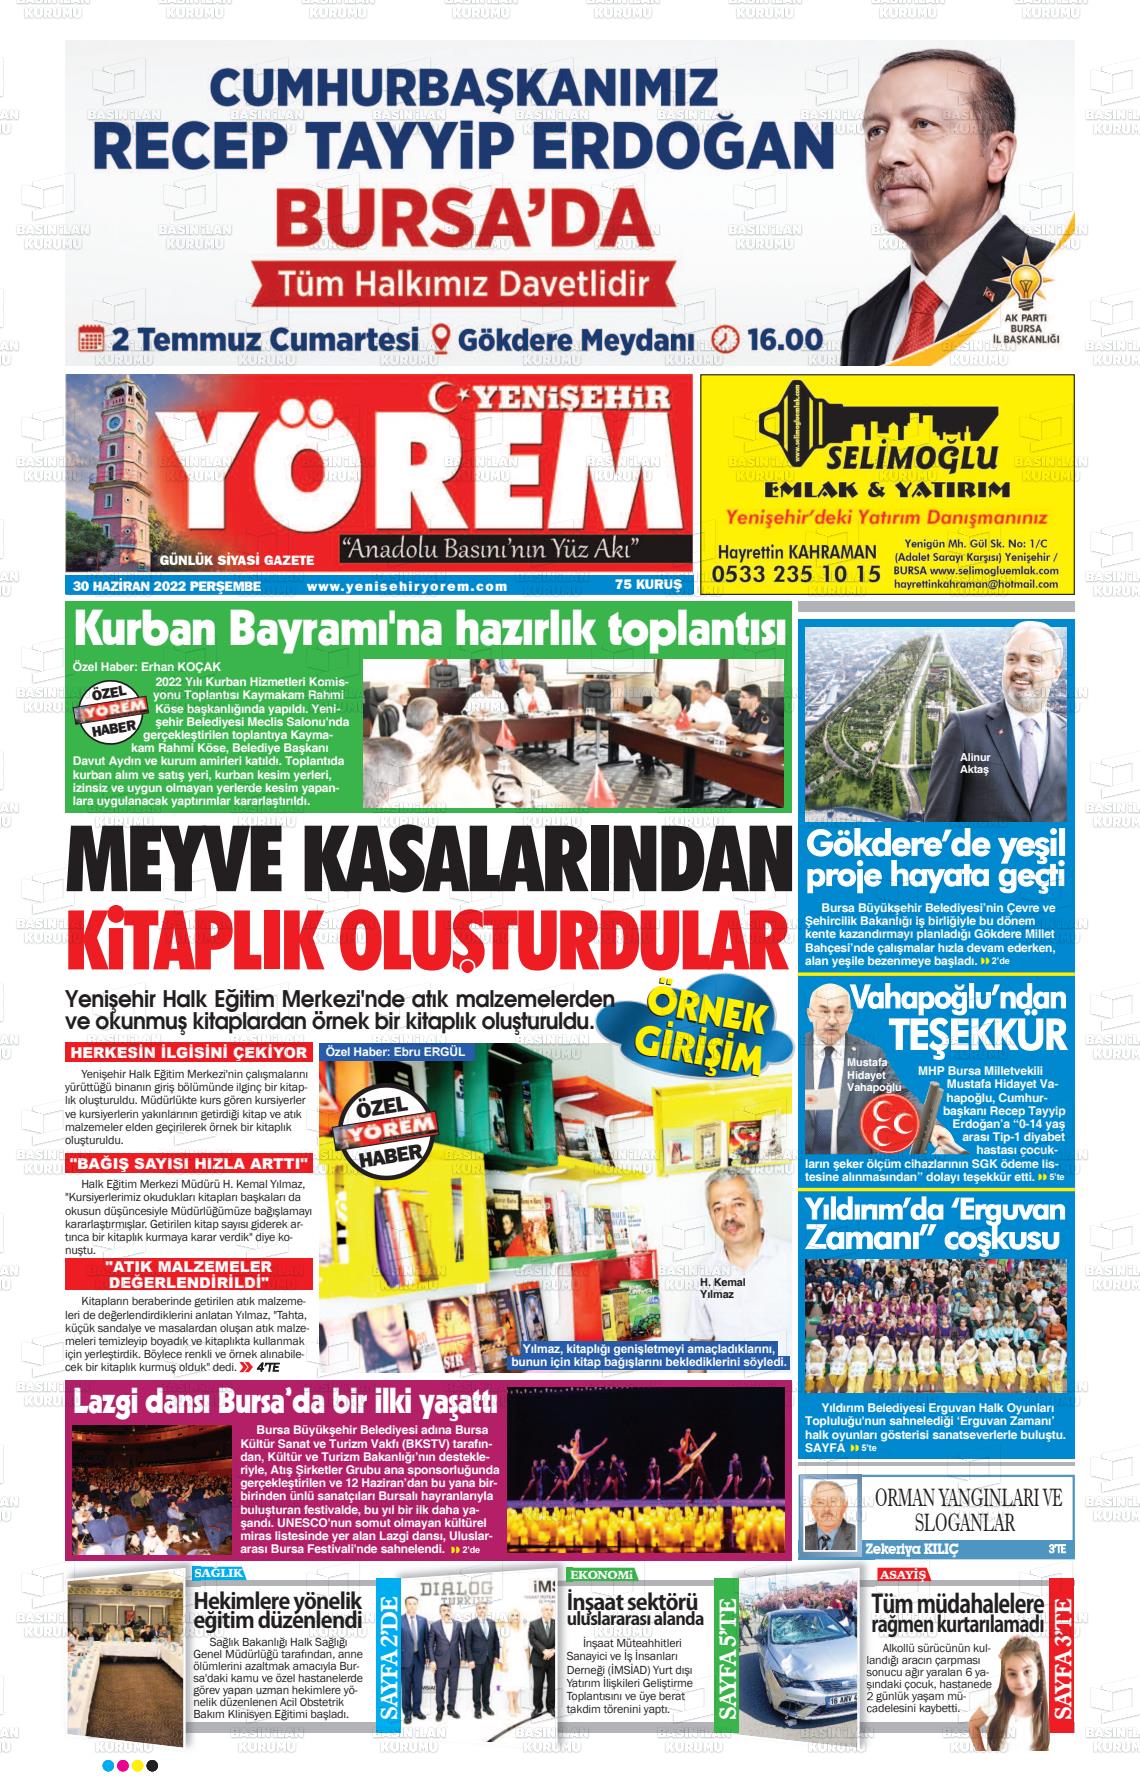 02 Temmuz 2022 Yenişehir Yörem Gazete Manşeti